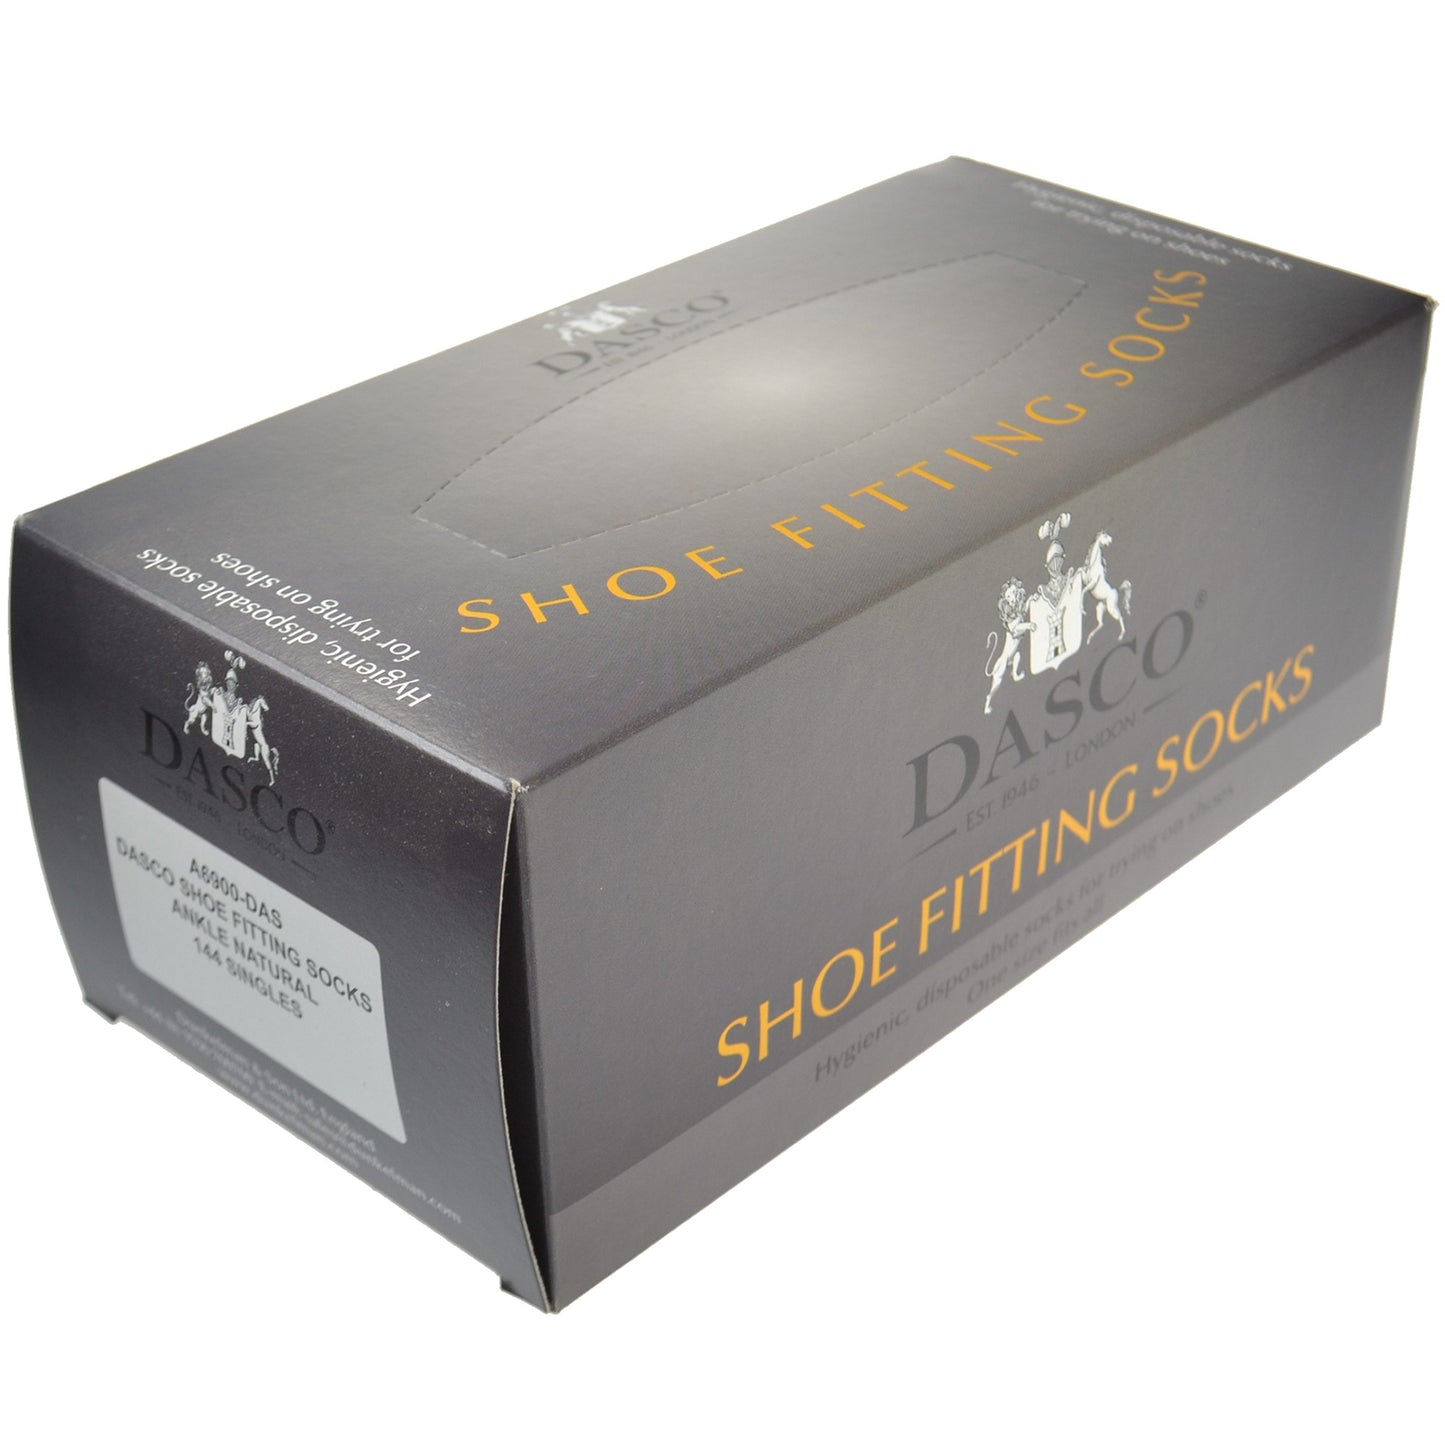 Dasco - 144pcs Nylon Shoe Fitting Socks - Low cut no show liner socks - Unisex